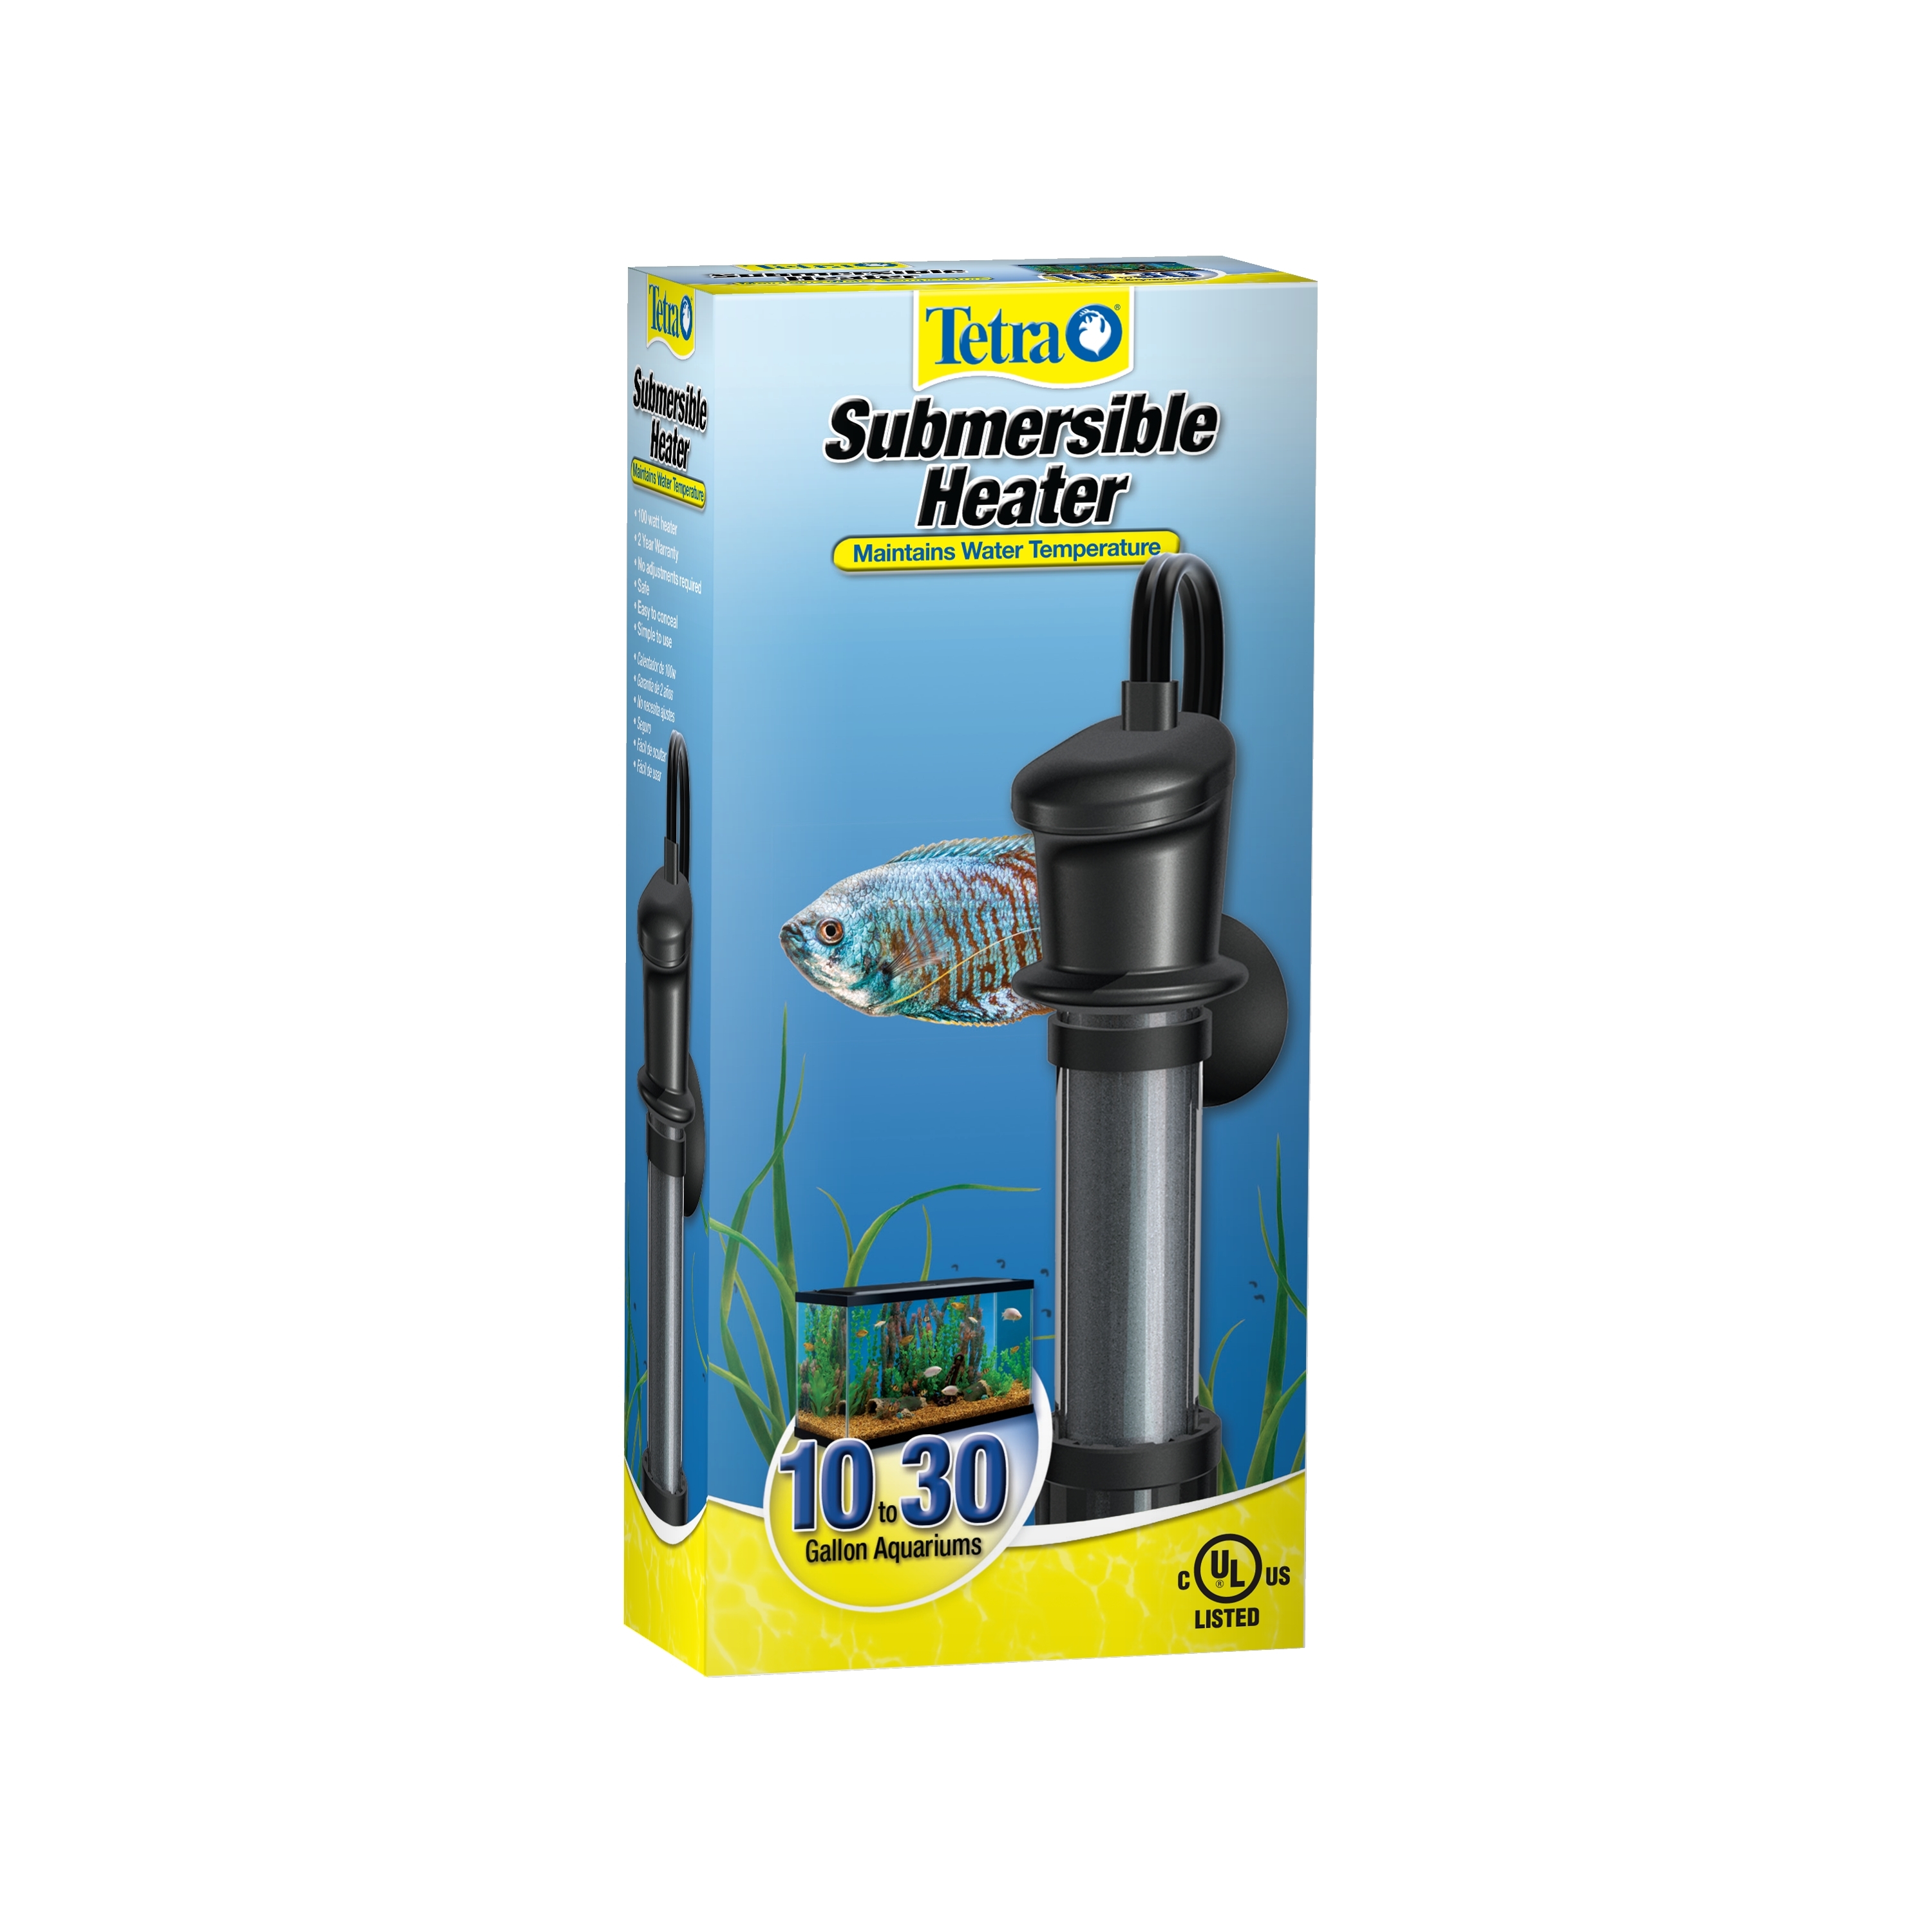 Tetra Submersible Aquarium Tank Heater, 10-30 Gallon, 100 Watts - image 6 of 7